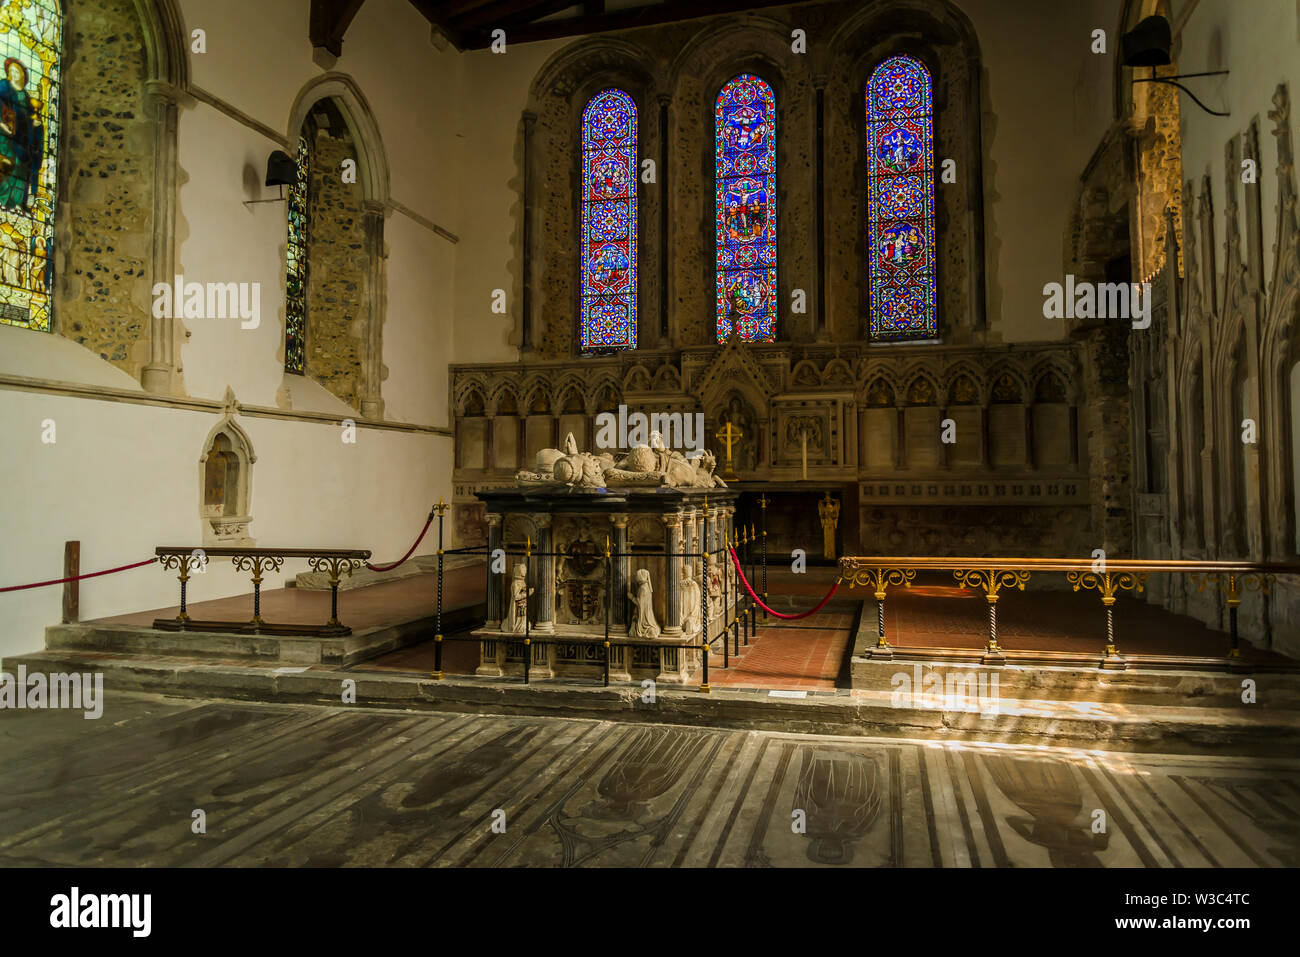 Atmospheric interior of the St Mary Magdalene parish church built in 13th century, Cobham, England, UK Stock Photo